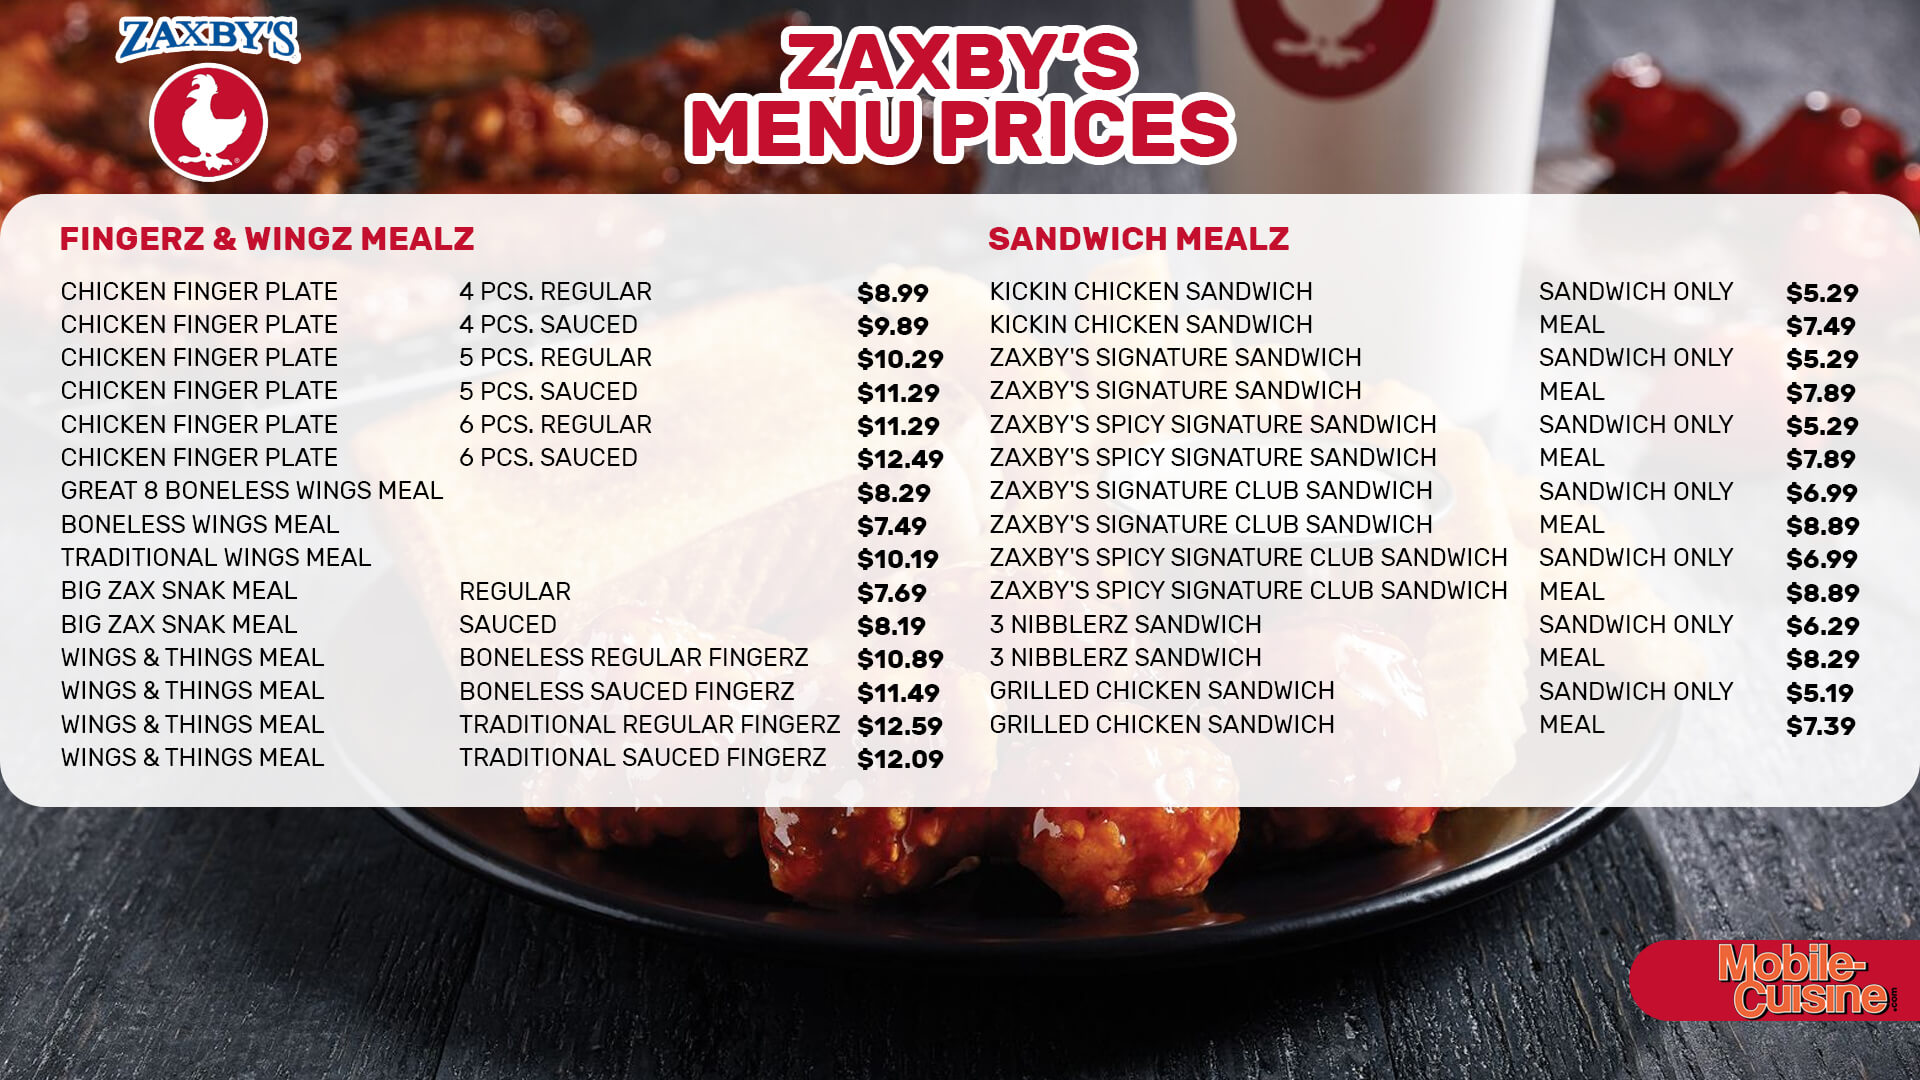 Zaxbys menu prices written